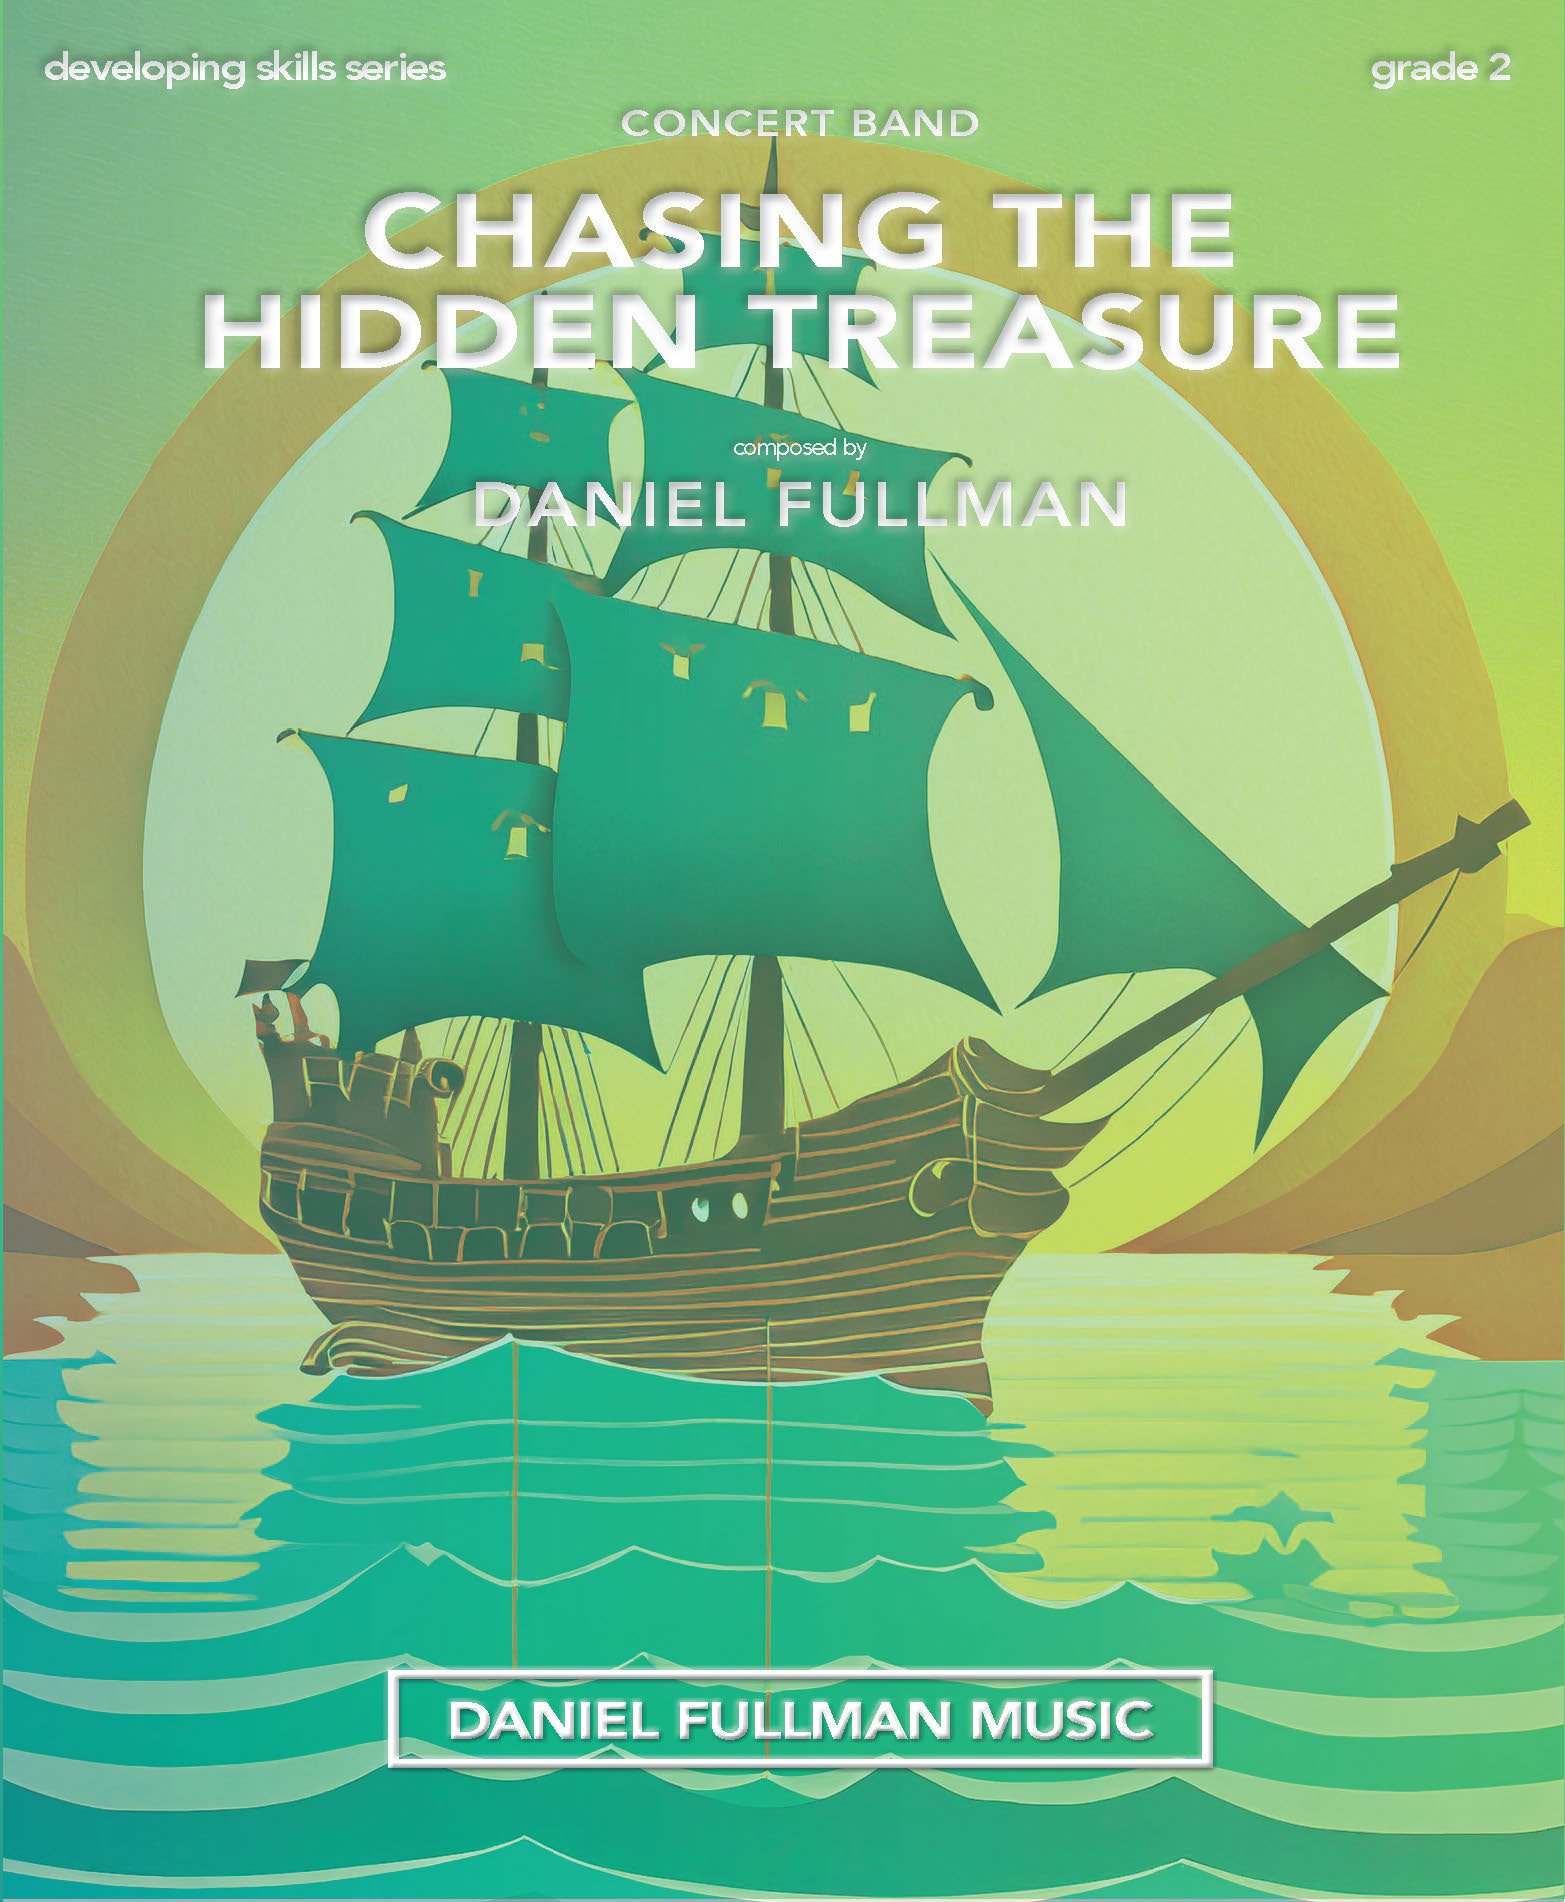 Chasing the Hidden Treasure band sheet music cover